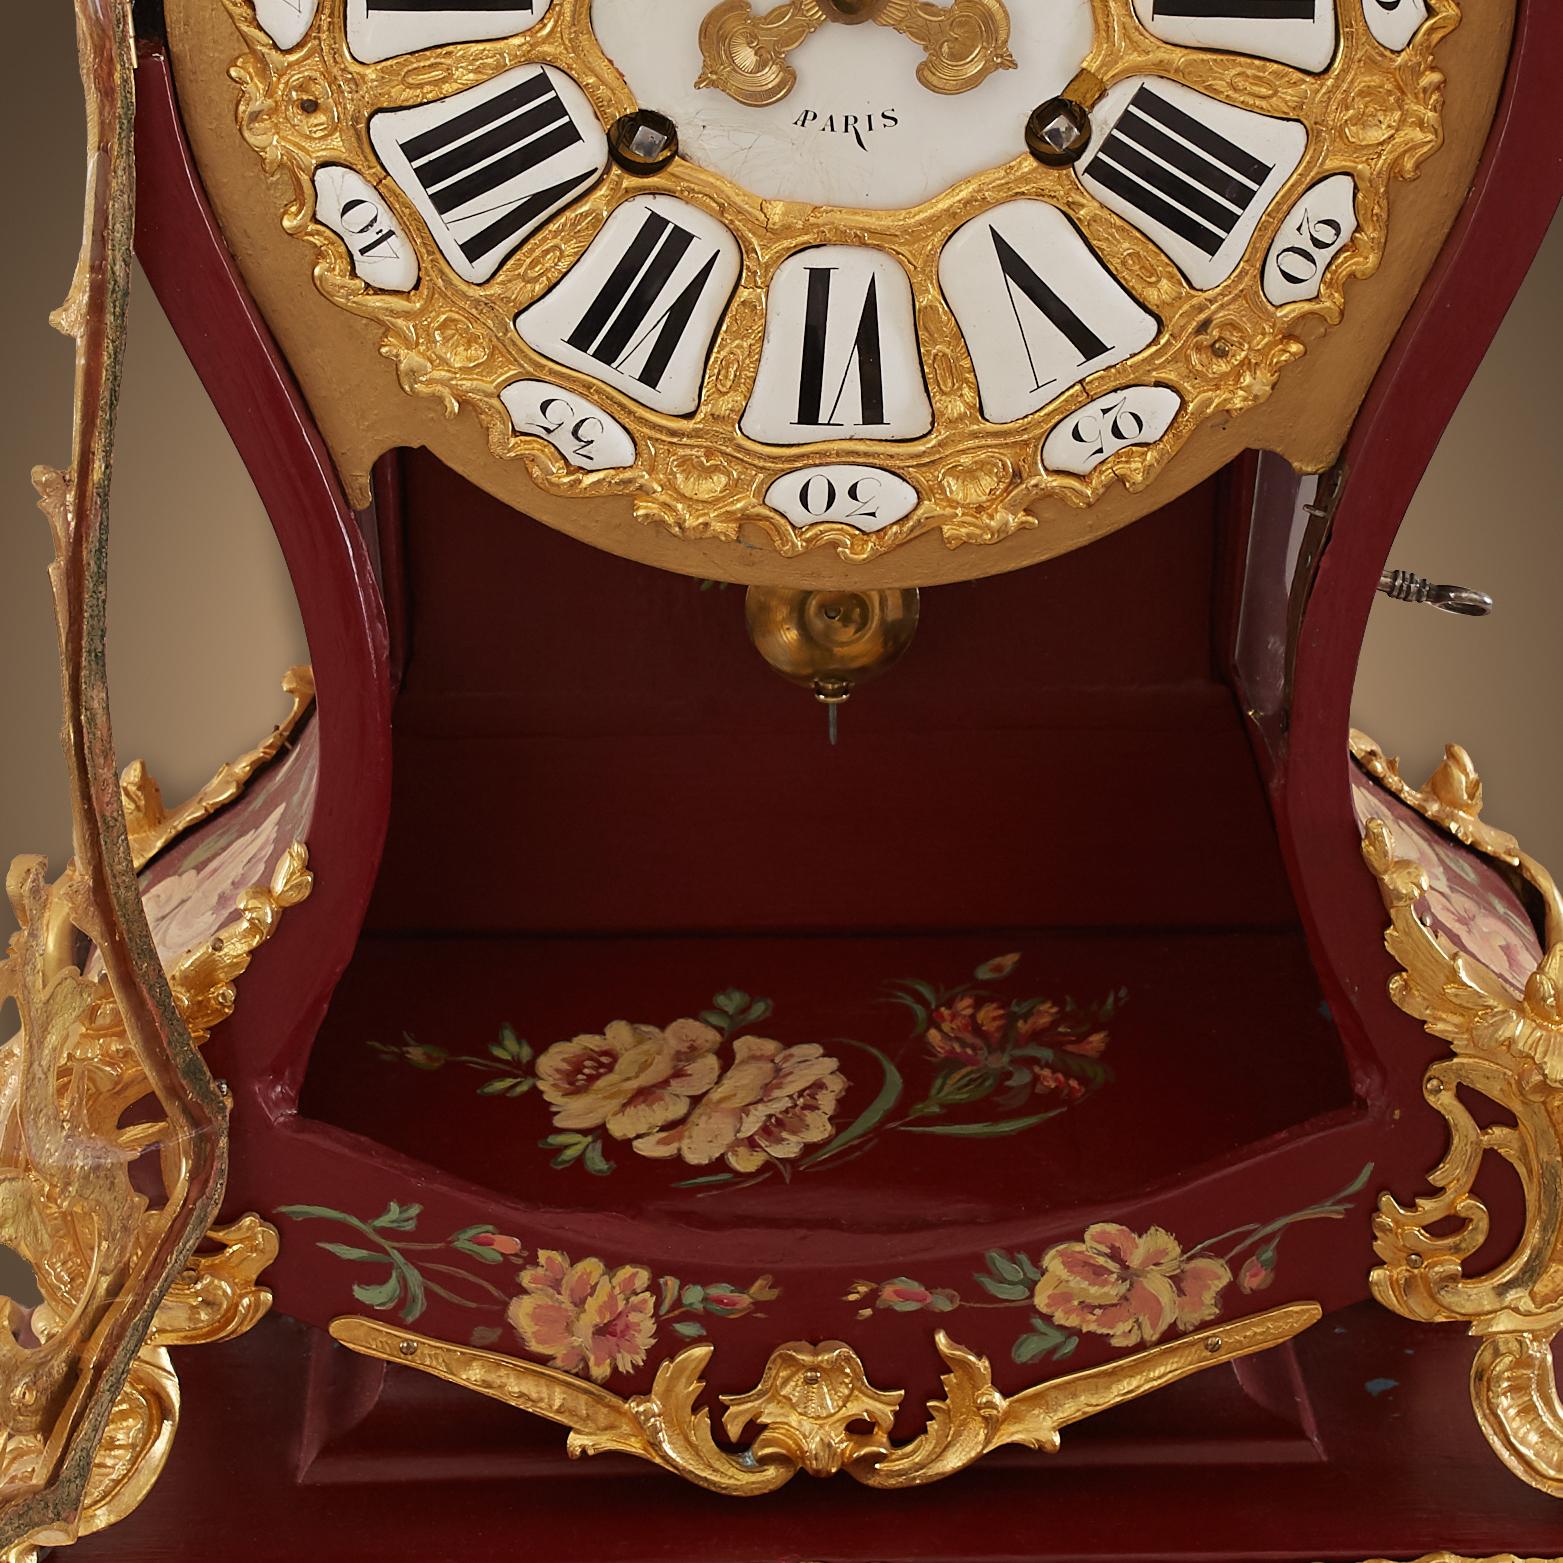 18th Century and Earlier Antique Ormolu French Cartel Clock, Honoring Femininity in Art